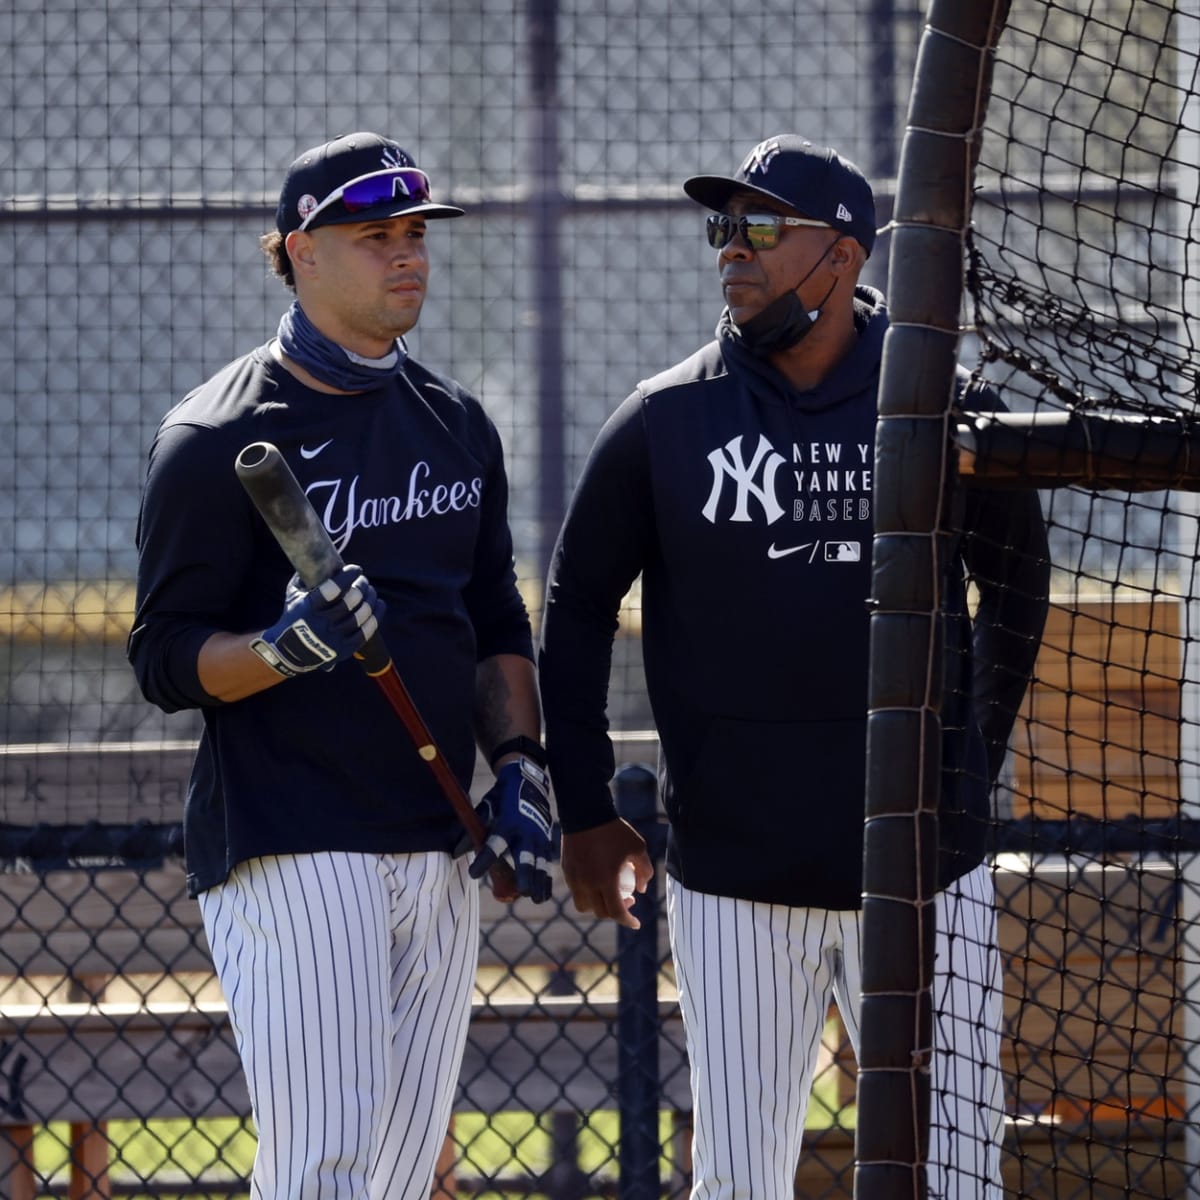 NY Yankees' Gary Sanchez trying to improve after rough 2020 season